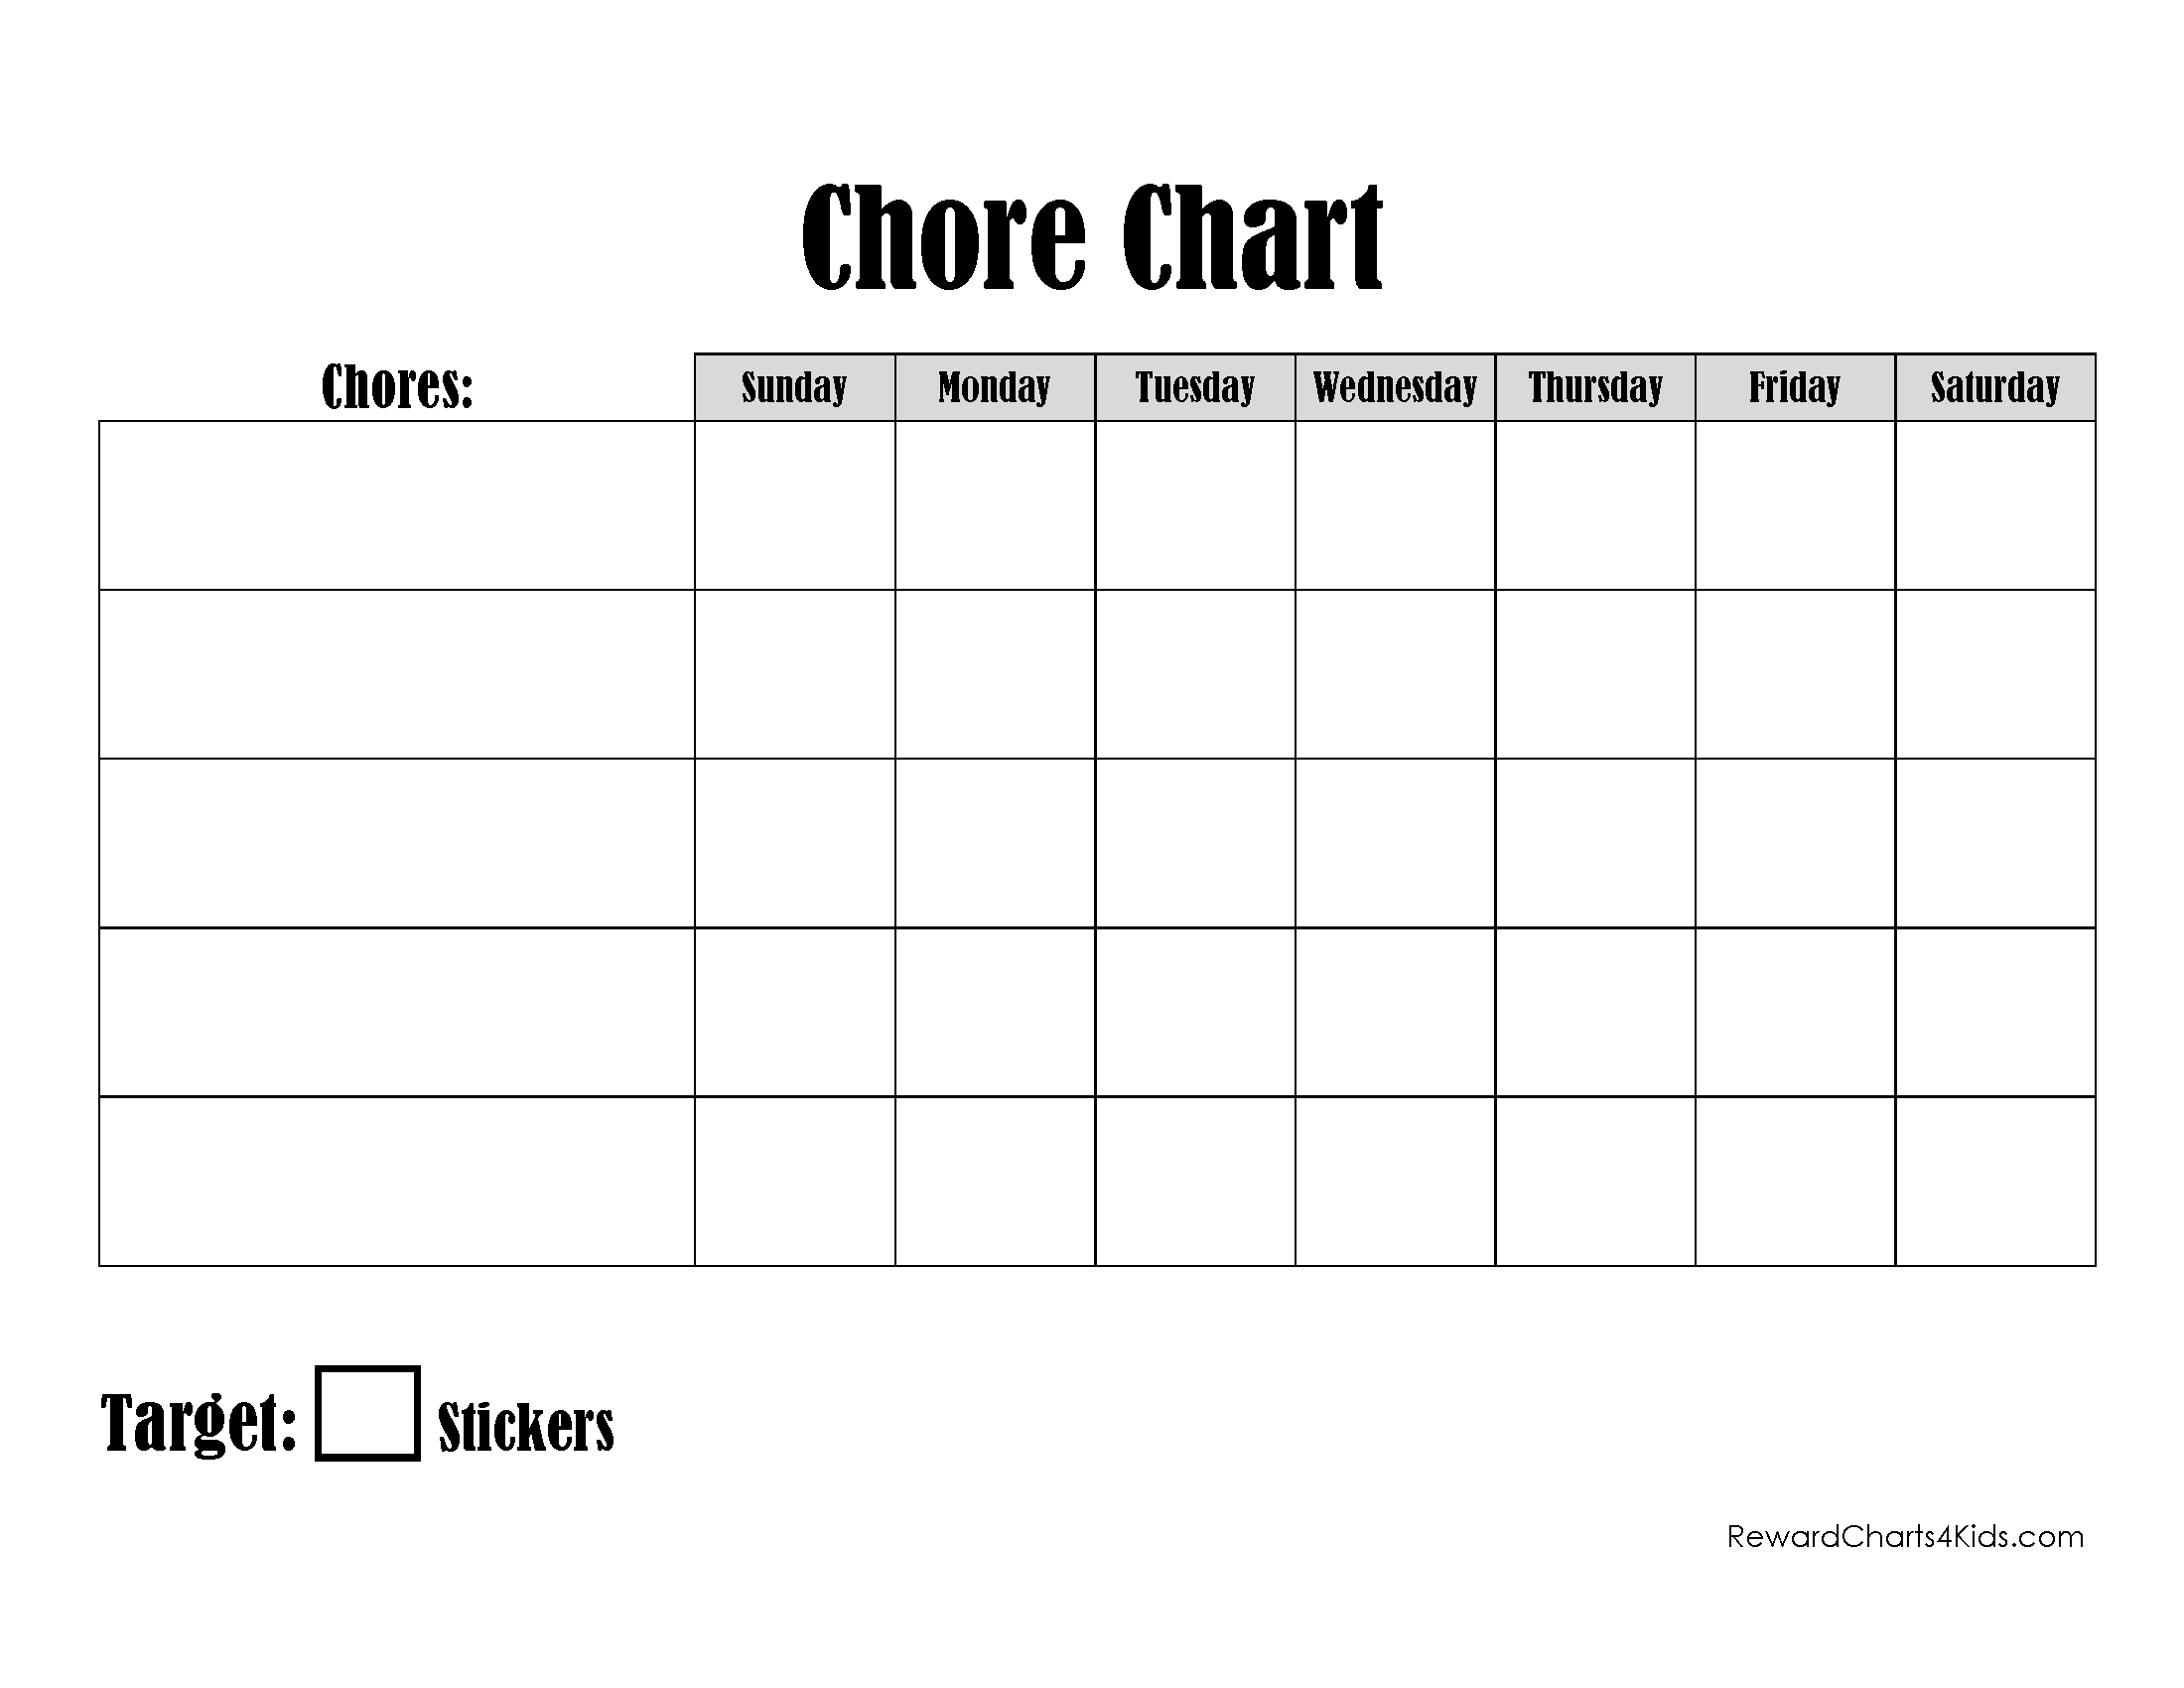 pin-by-susan-wagnon-on-charts-chores-chore-chart-chore-chart-template-preschool-chore-charts